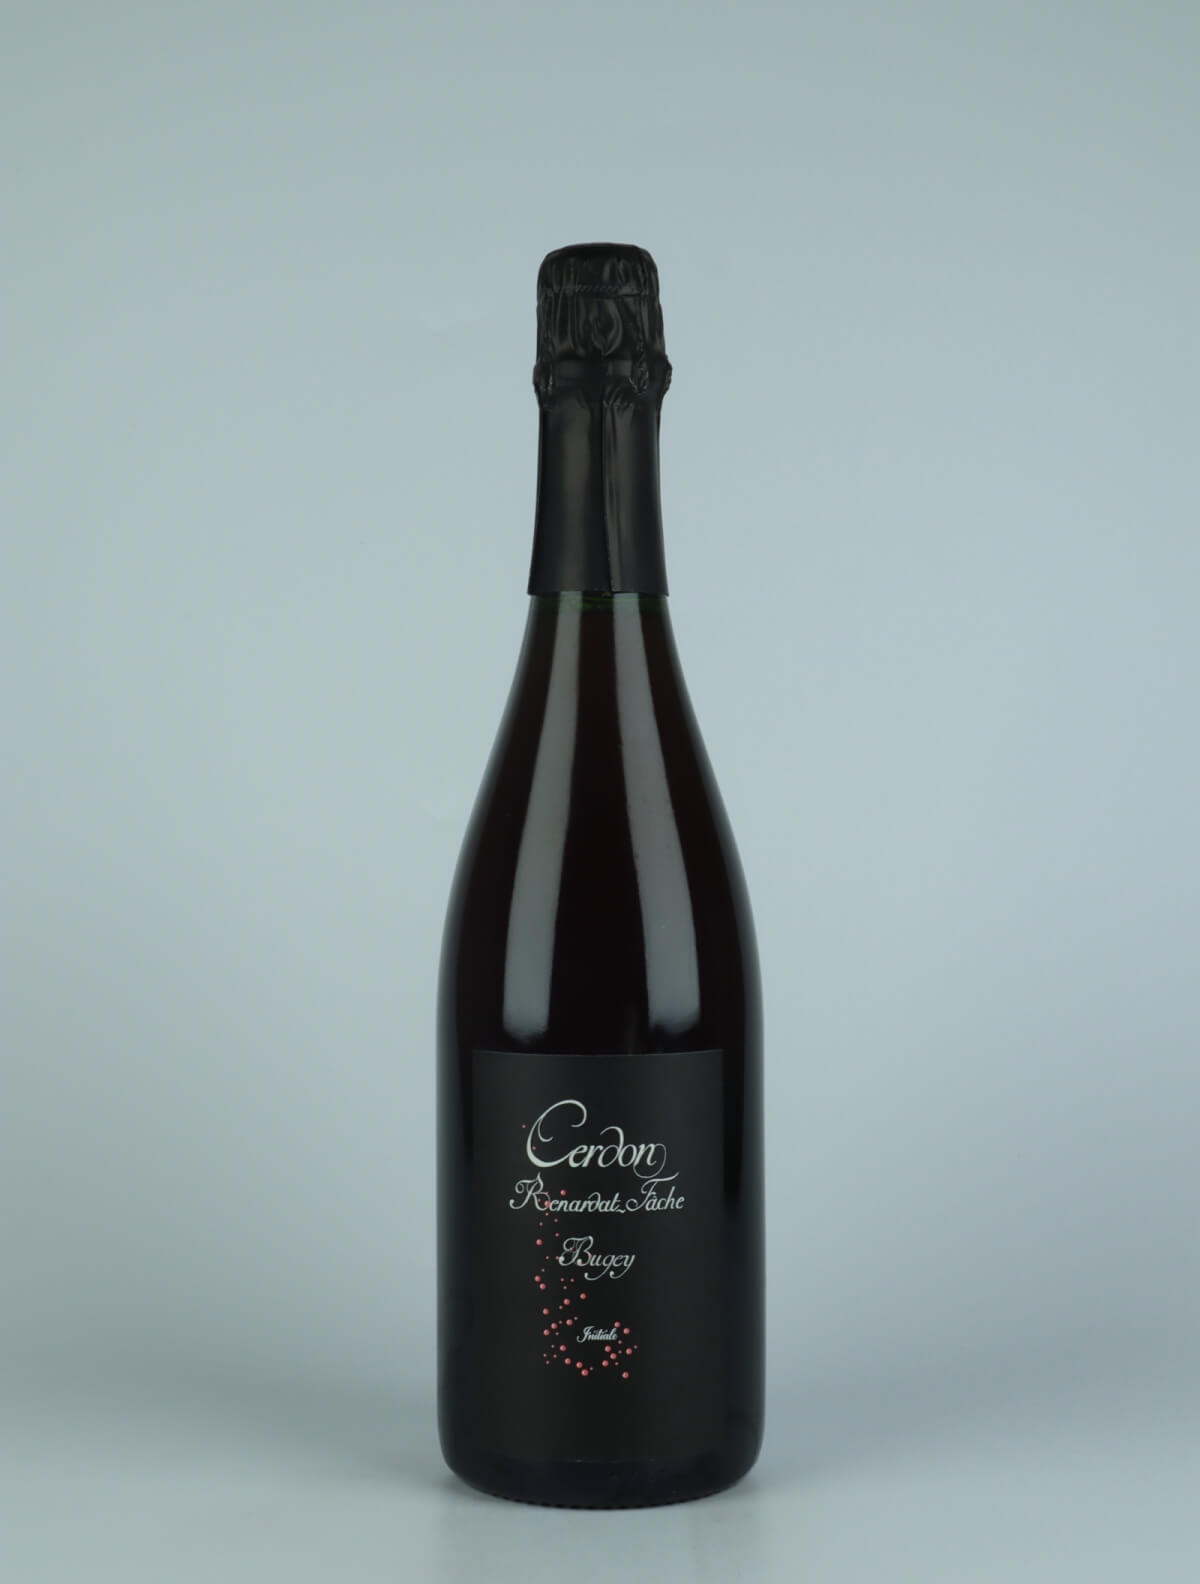 A bottle N.V. Bugey Cerdon - Initiale Sweet wine from Renardat Fache, Bugey in France